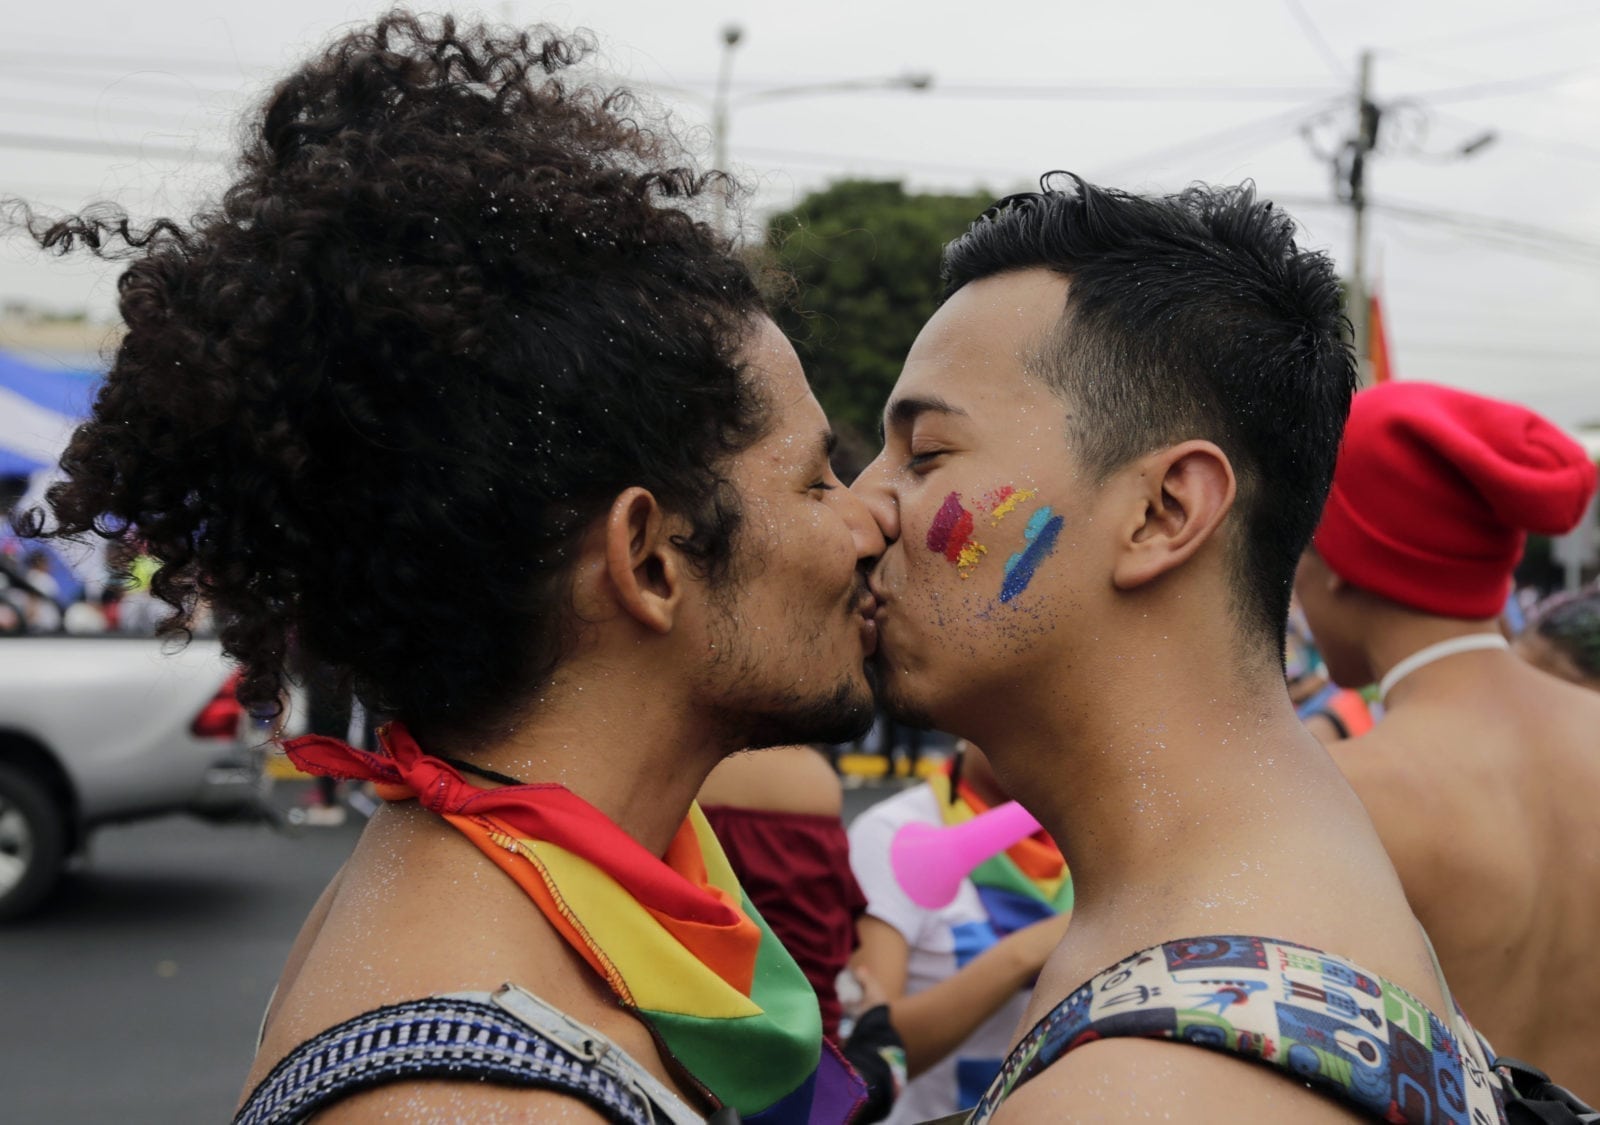 геи и лесбиянки в мире фото 110